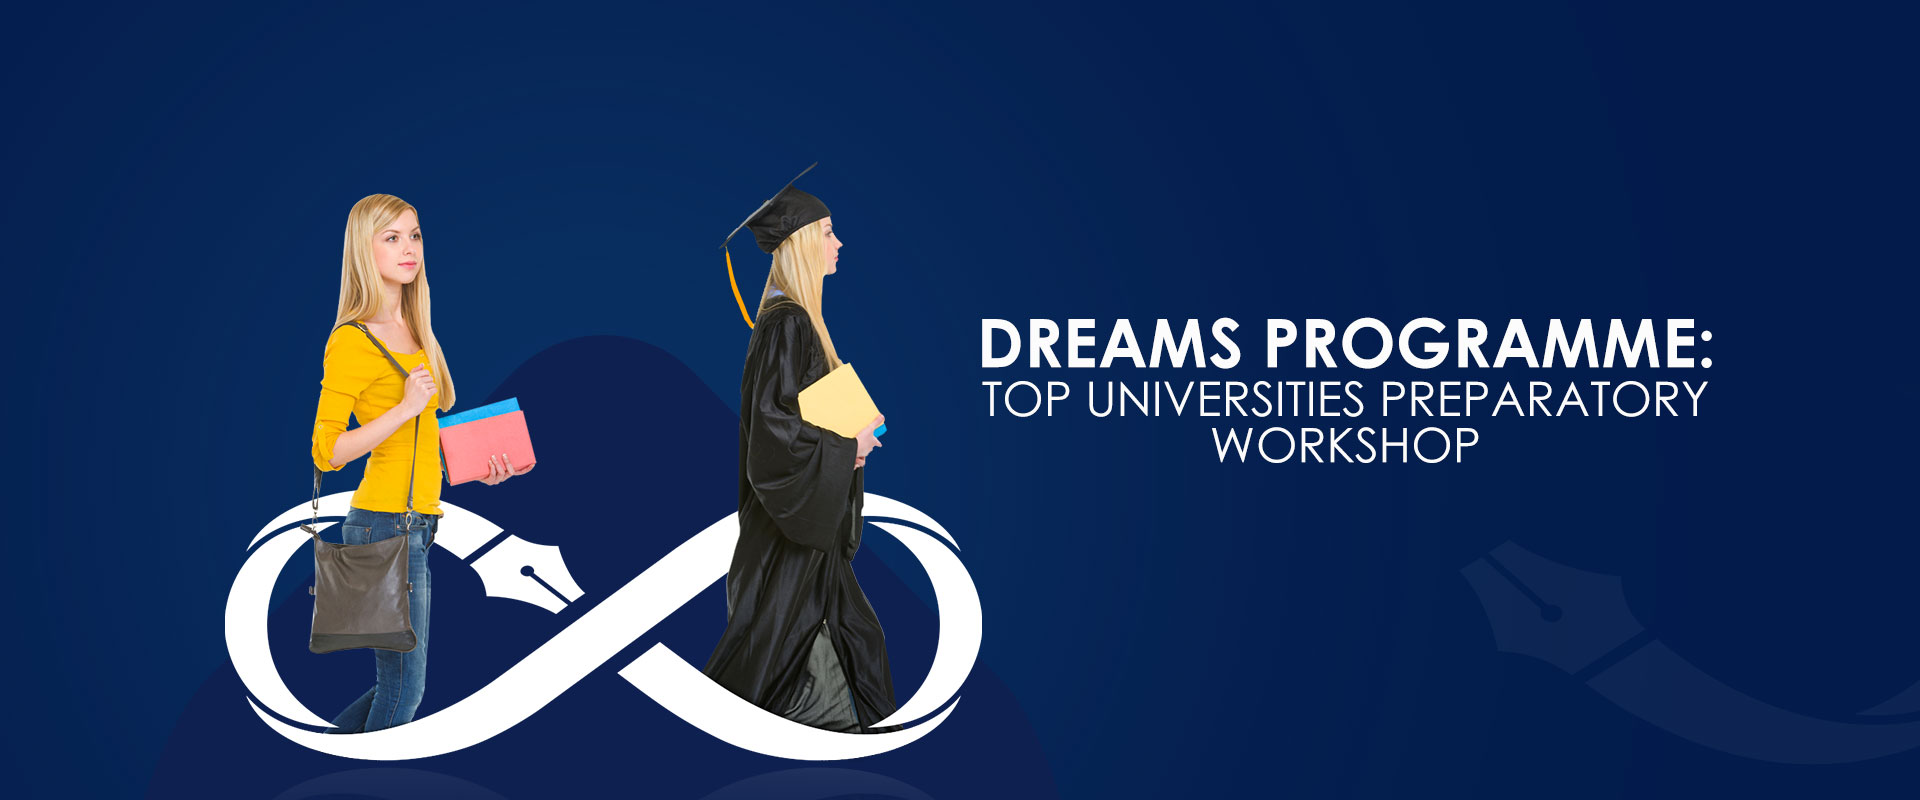 Dreams Prgoramme: Top Universities Preparatory Workshop